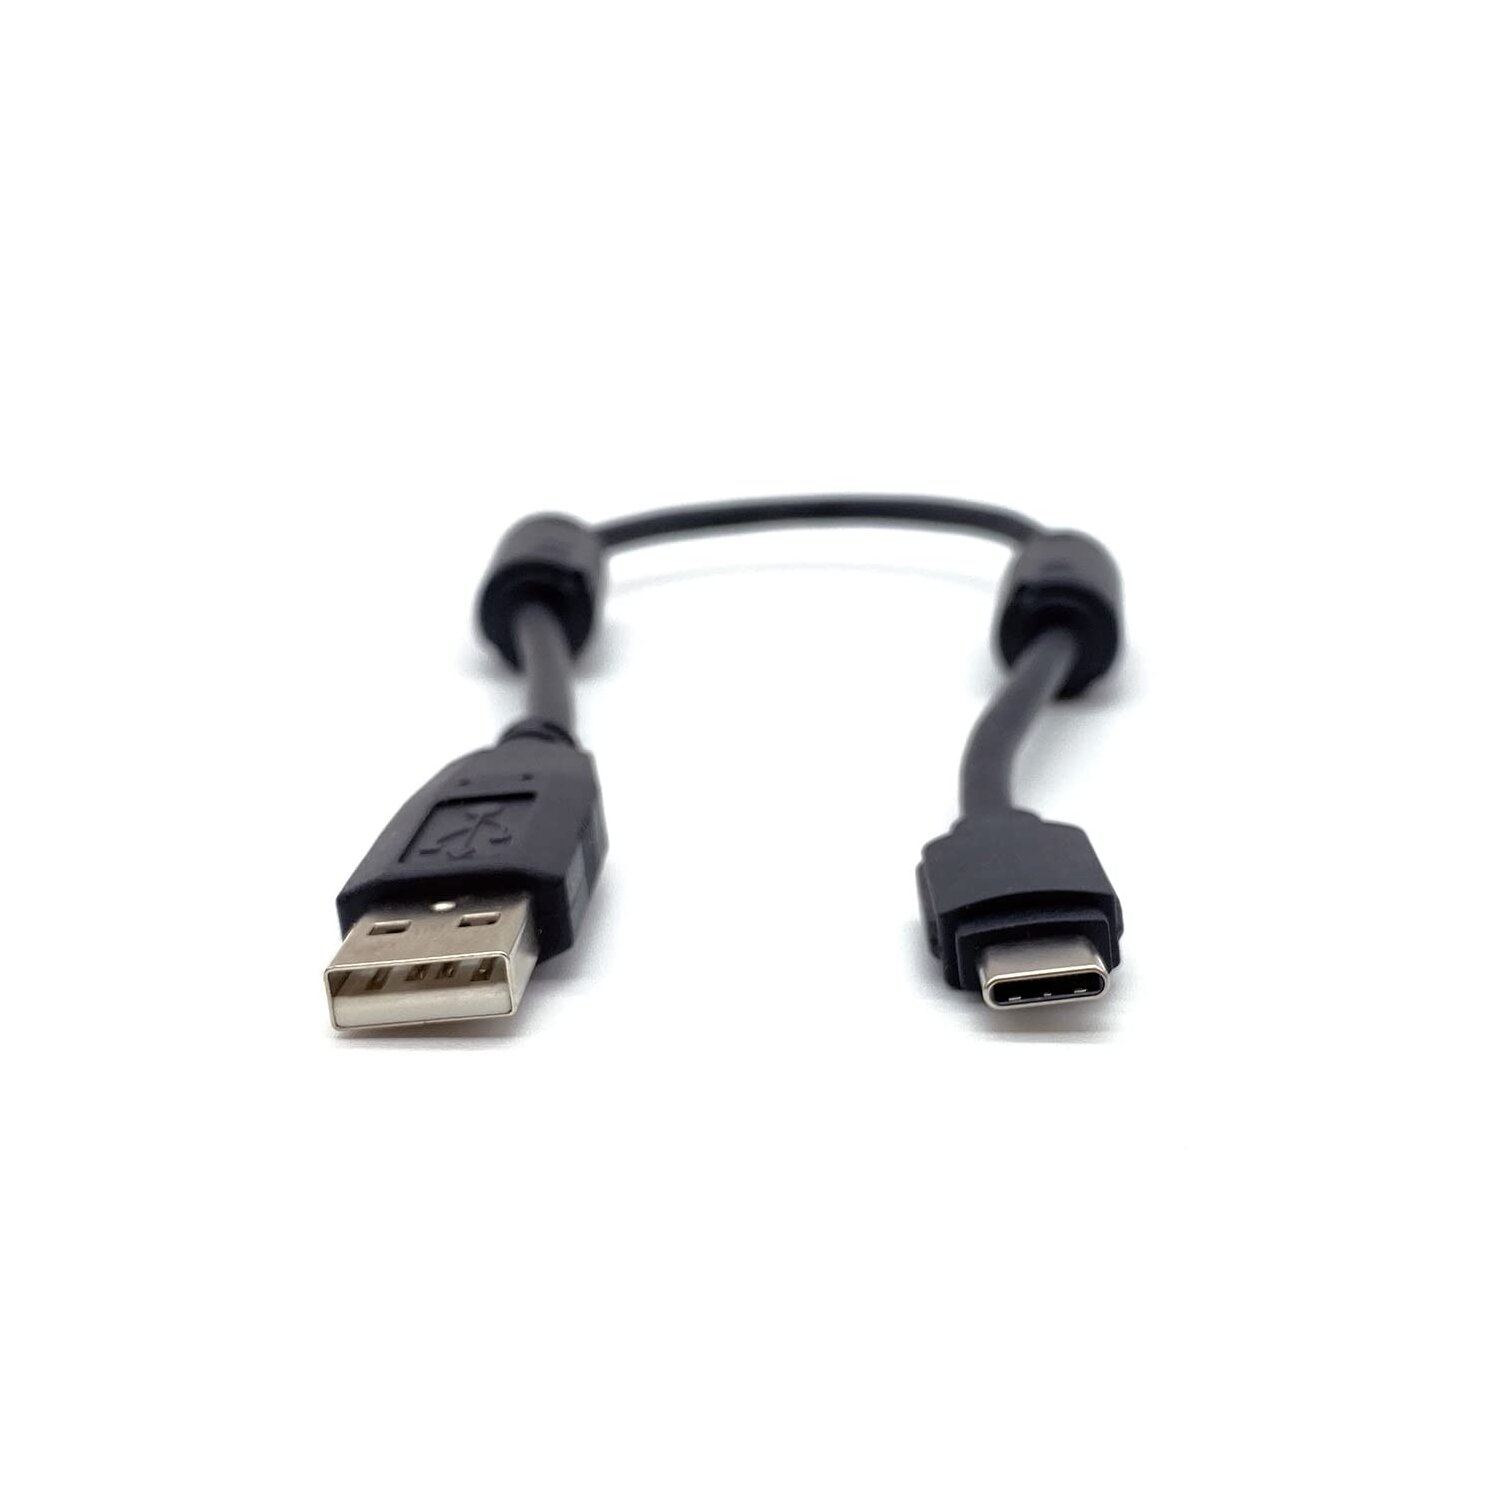 Geschirmtes kurzes USB-A auf USB-C Kabel mit Ferriten